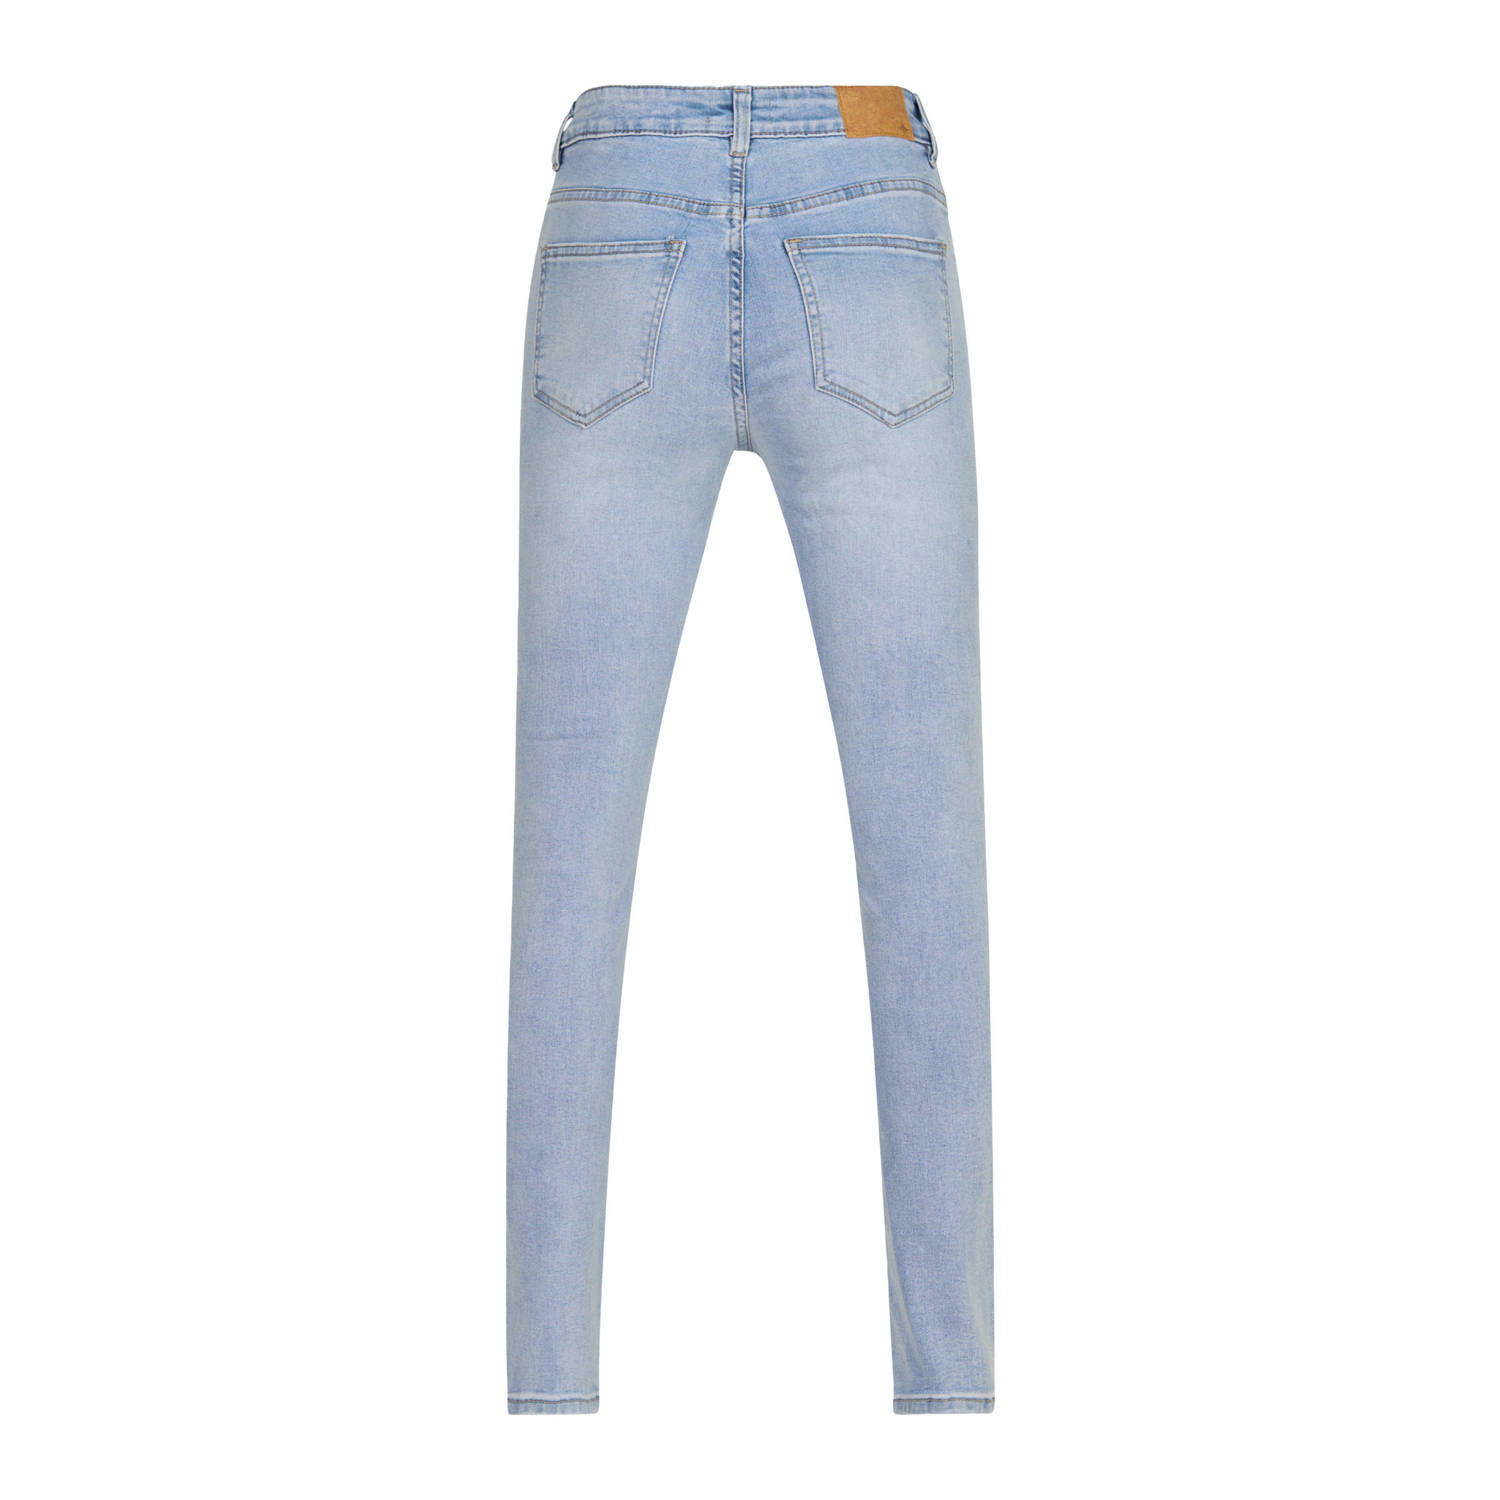 Shoeby skinny jeans light blue denim